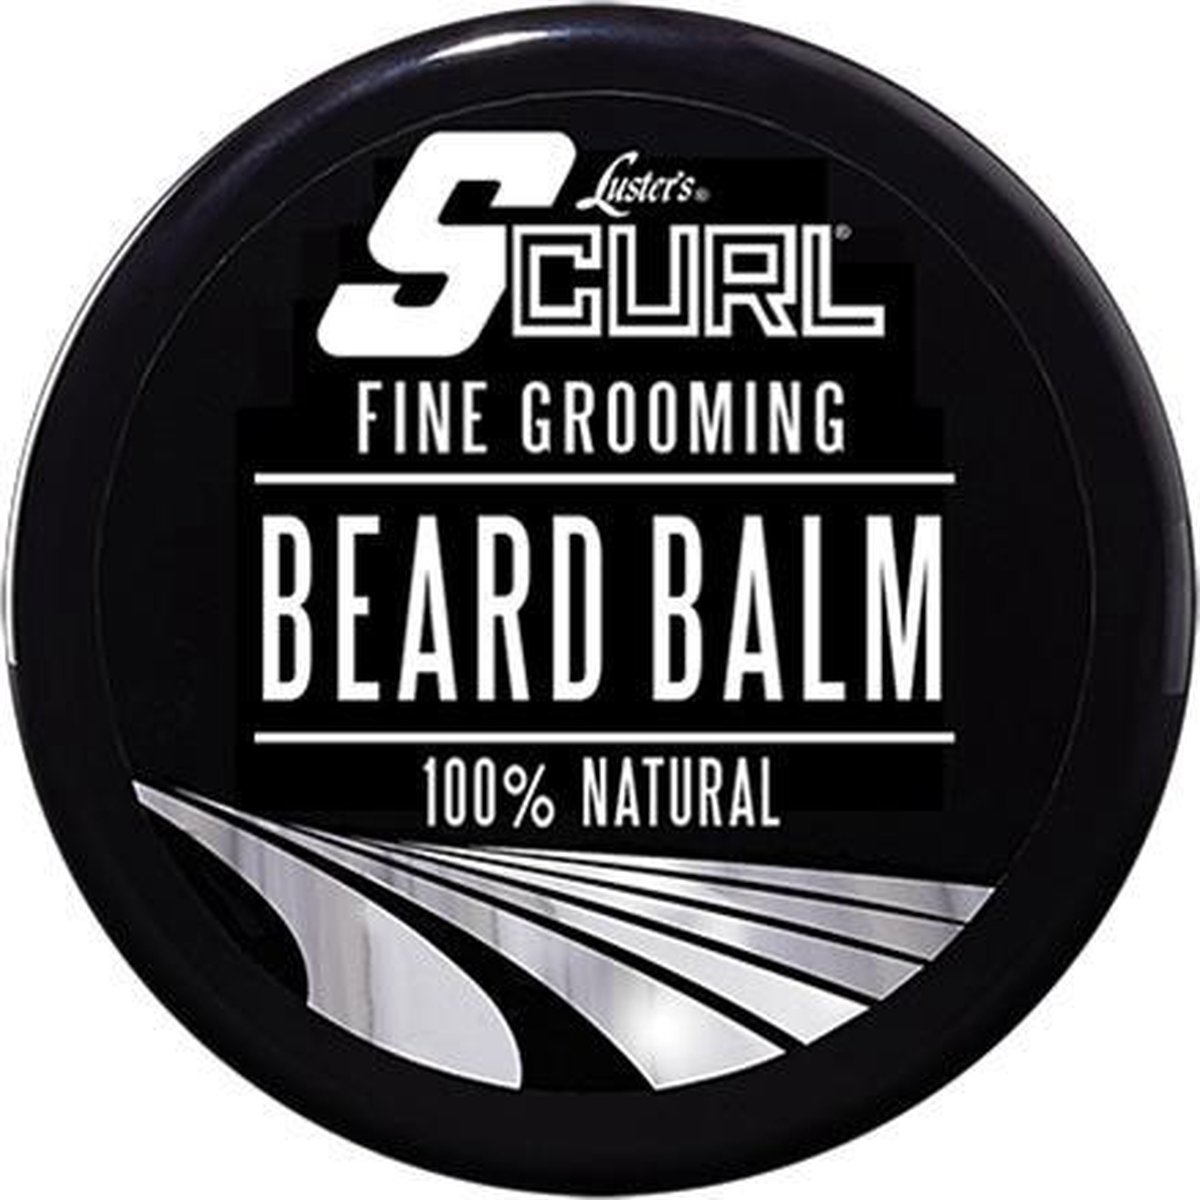 S-Curl Beard Balm 59 ml